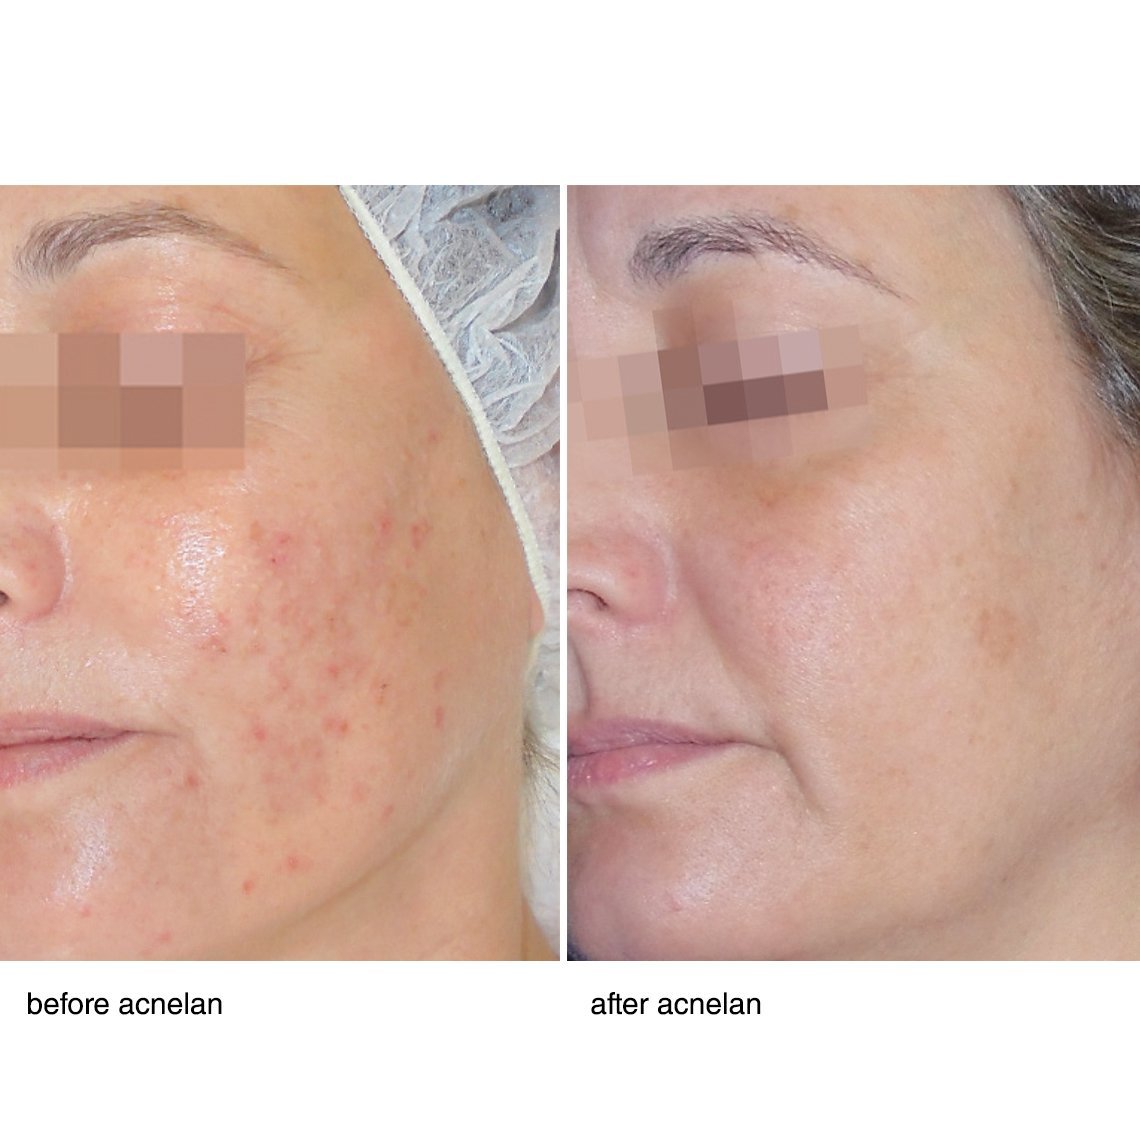 Acnelan Peeling Treatment for Acne prone skin